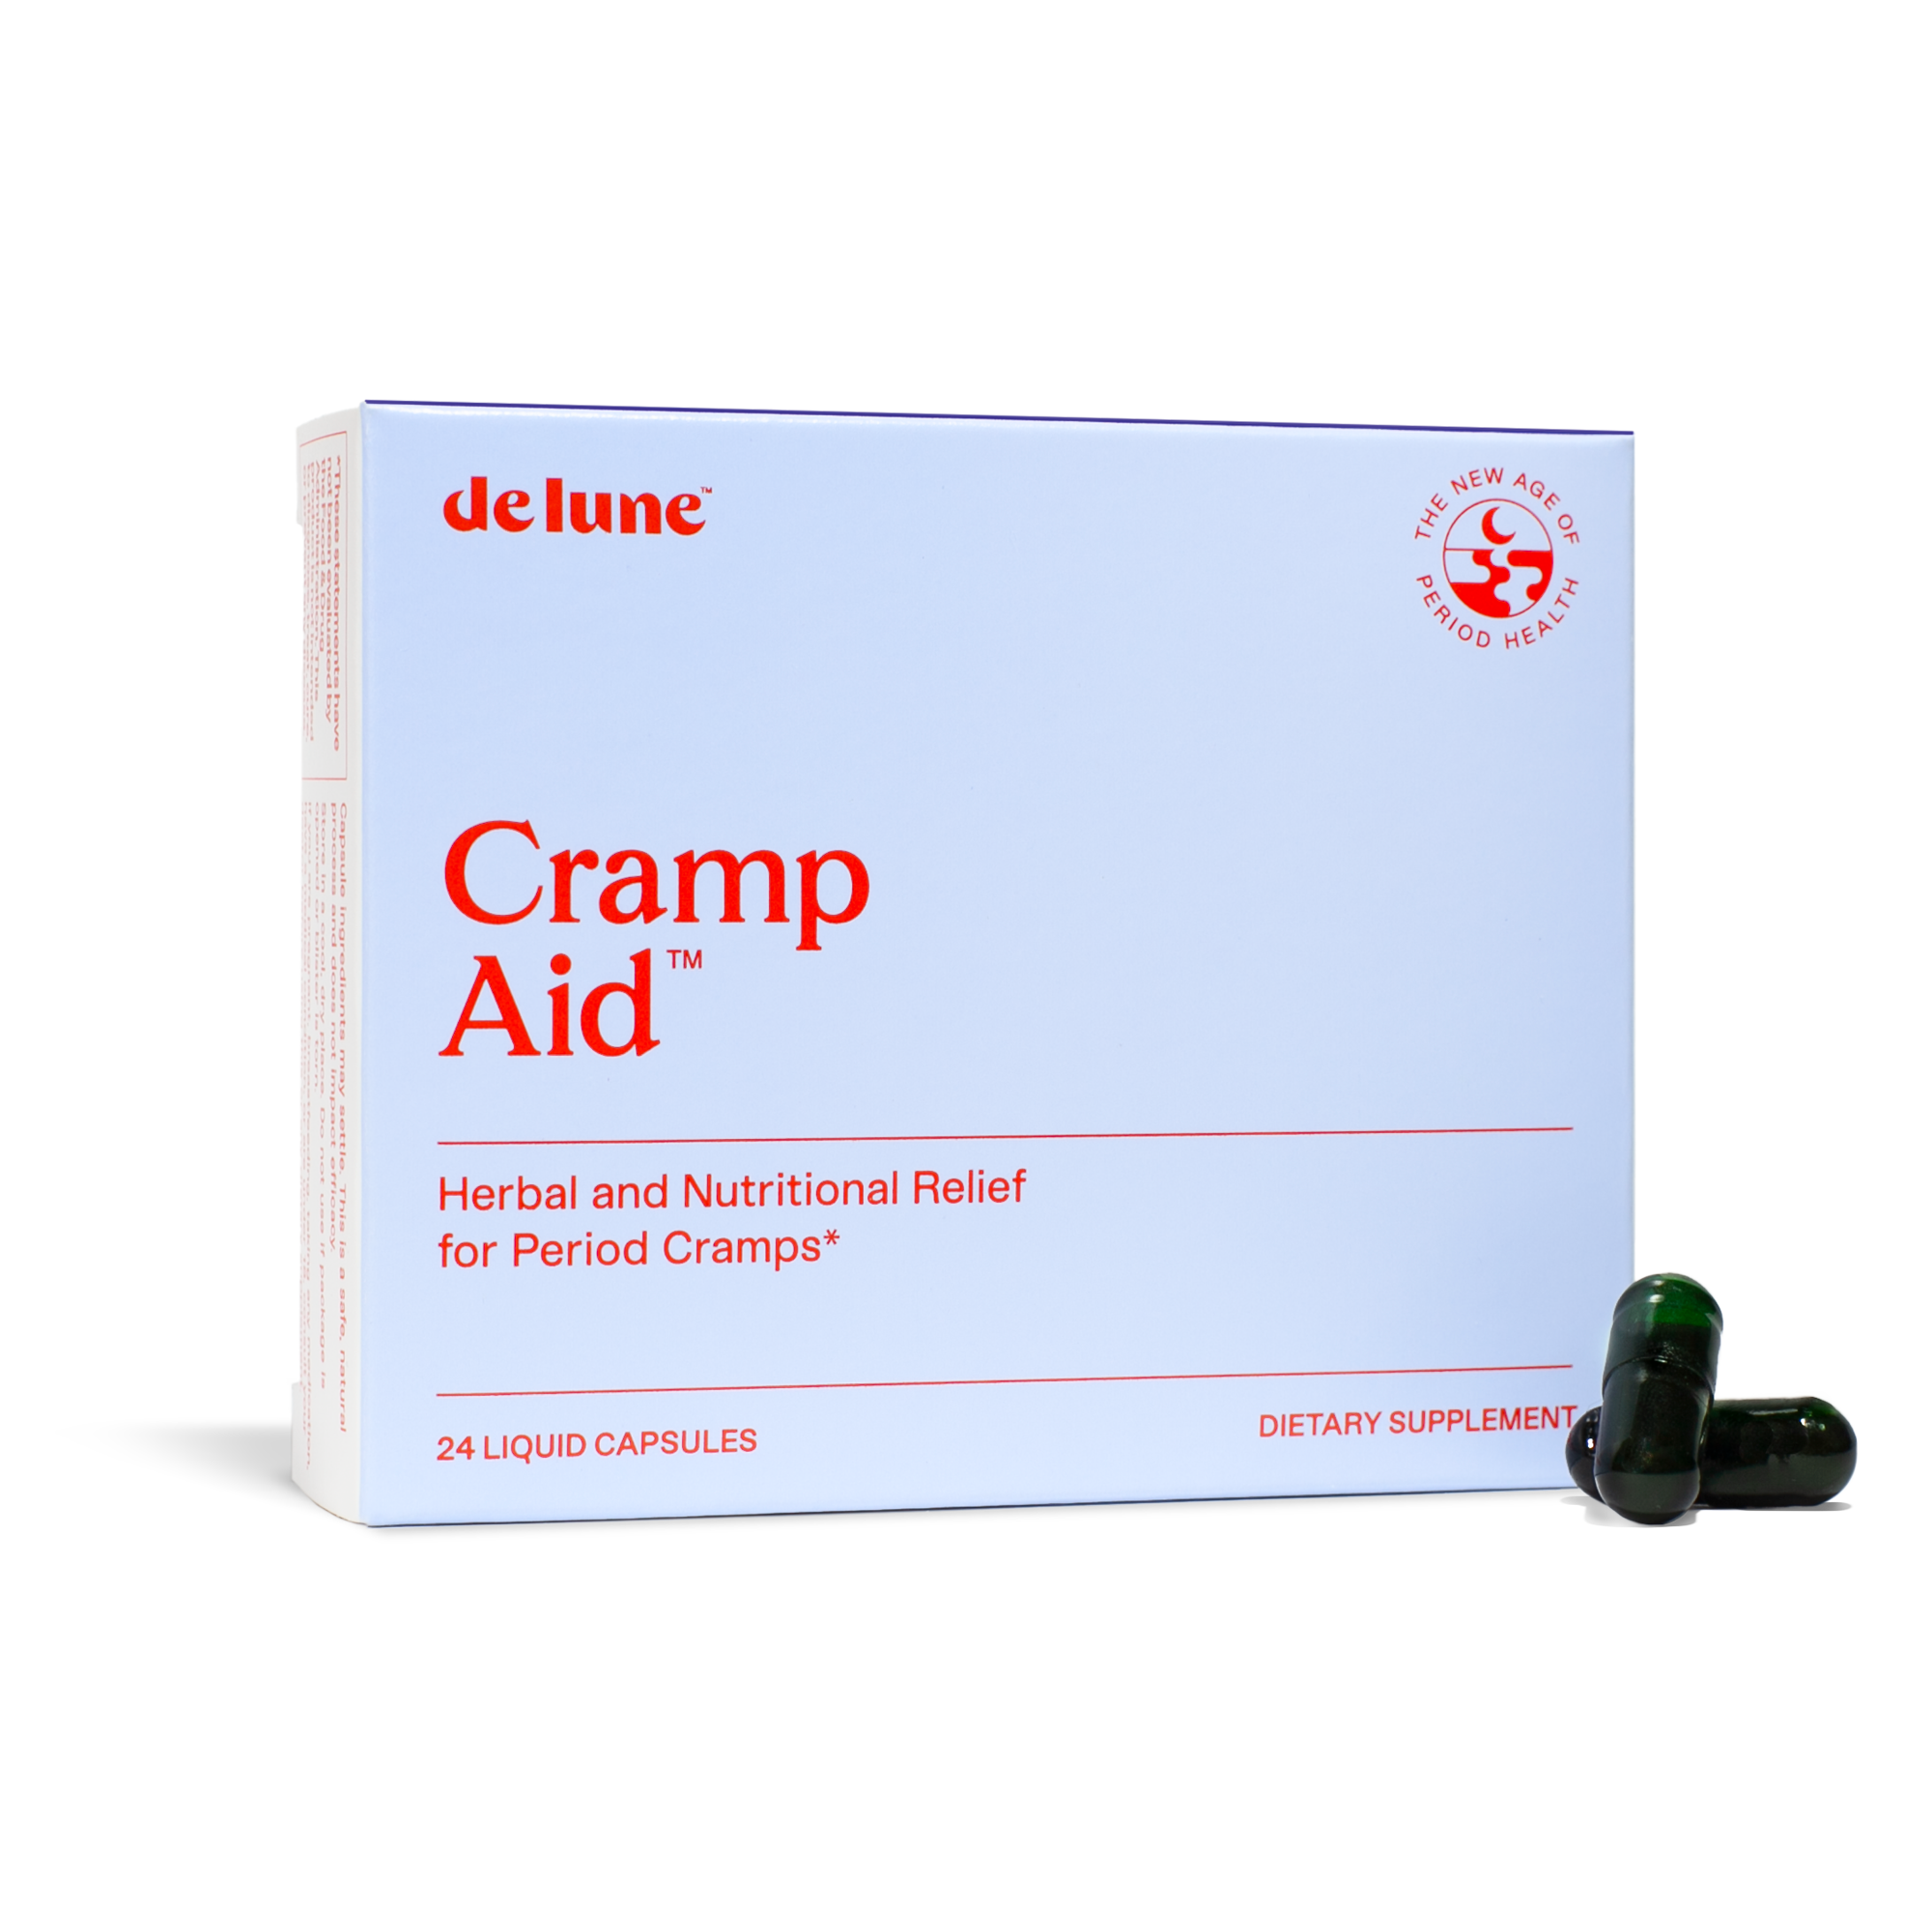 can aspirin help with period cramps